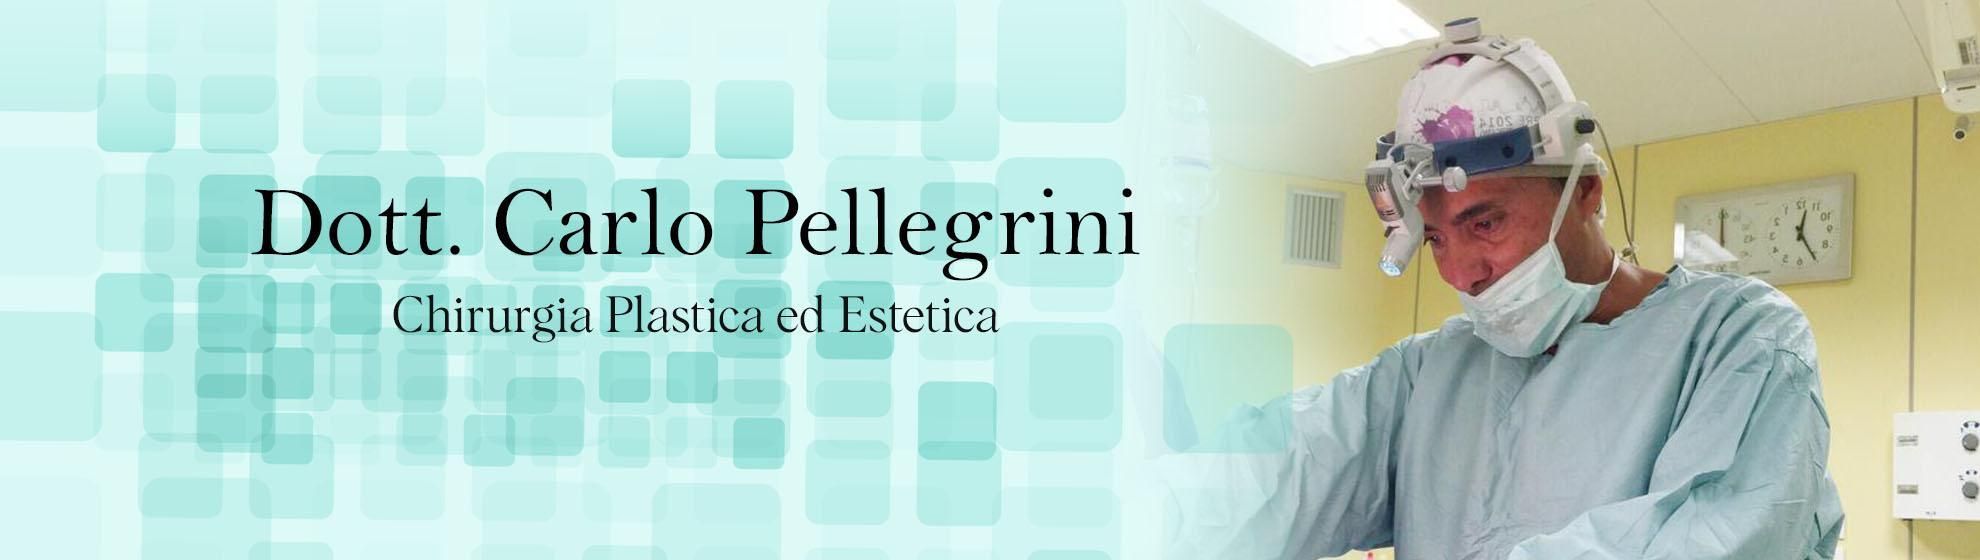 Dott. Carlo Pellegrini